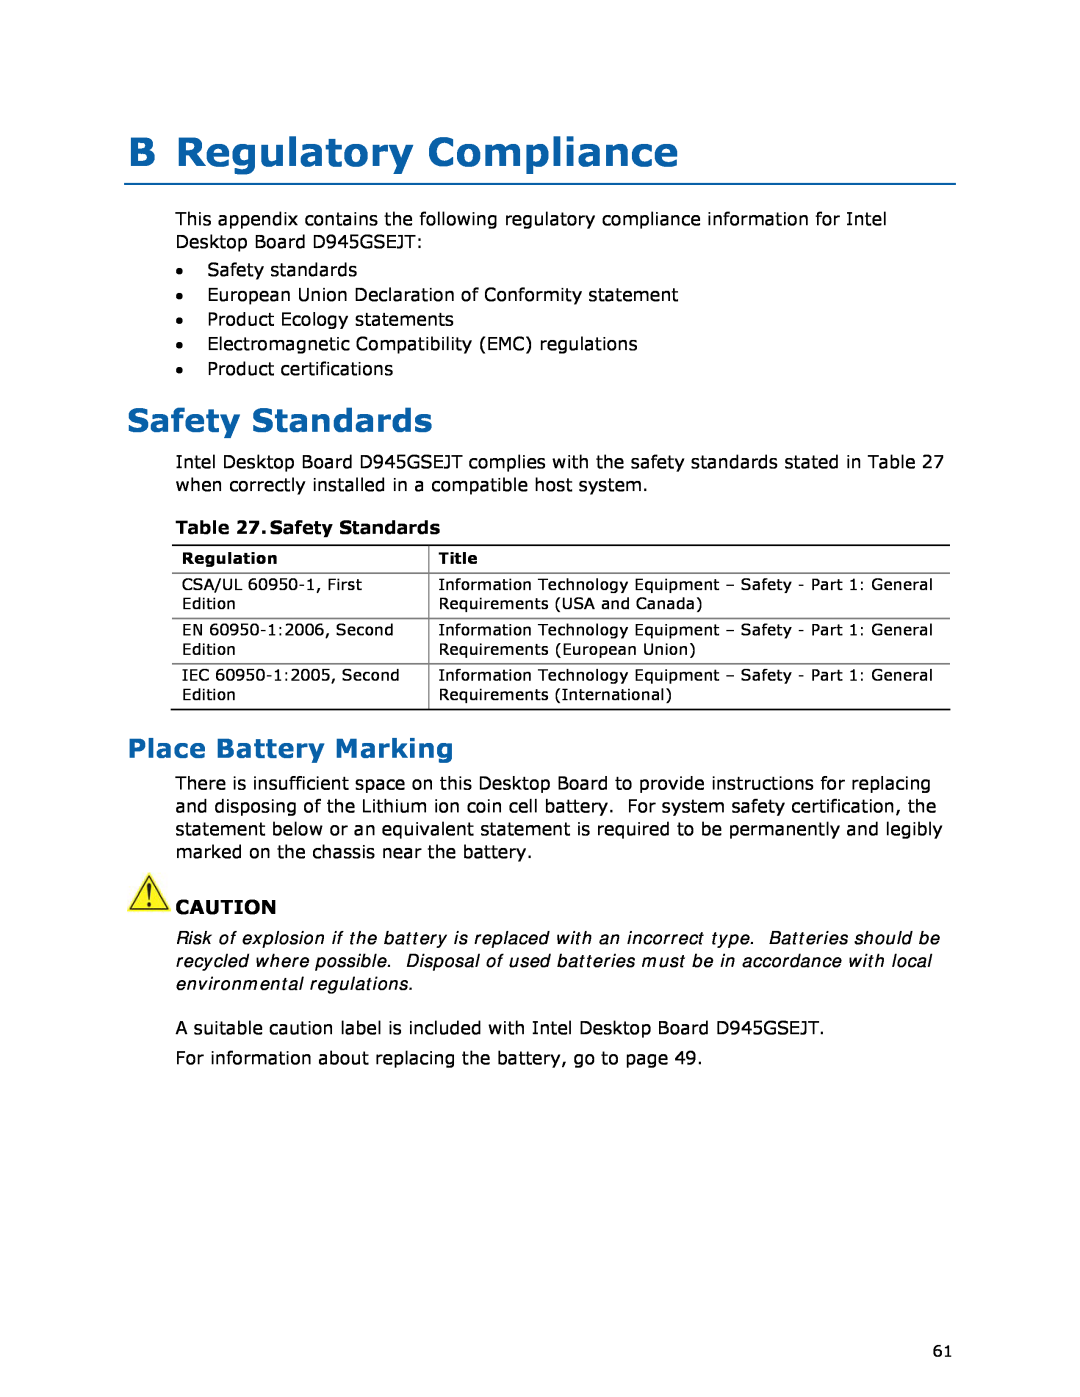 Intel D945GSEJT manual B Regulatory Compliance, Safety Standards, Place Battery Marking 